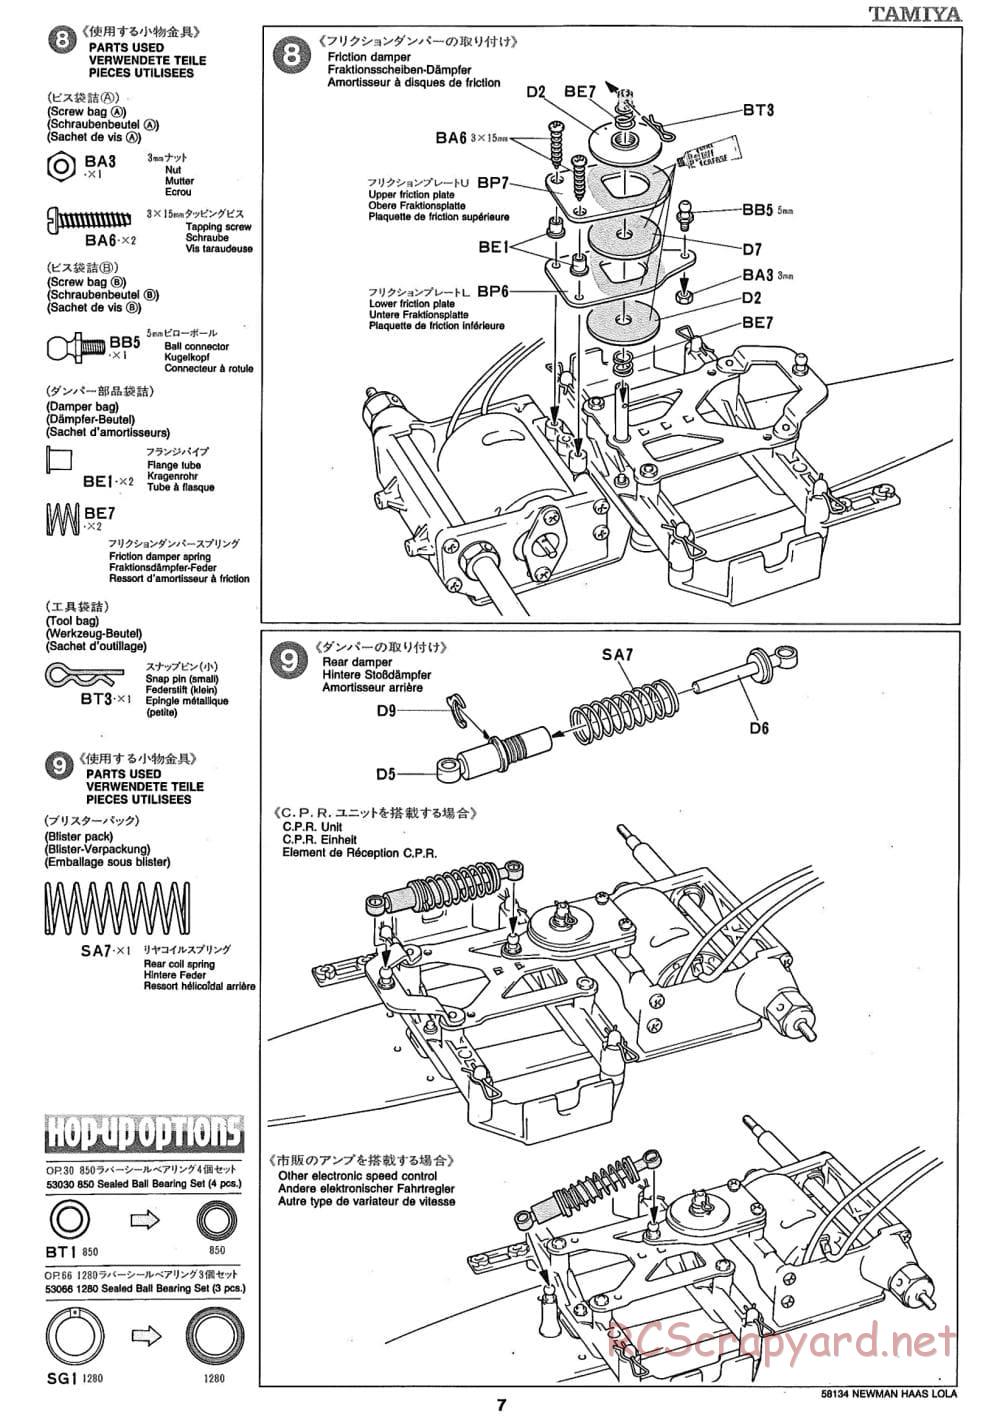 Tamiya - Newman Haas K-Mart Texaco Lola T93/00 Ford - F103L Chassis - Manual - Page 7